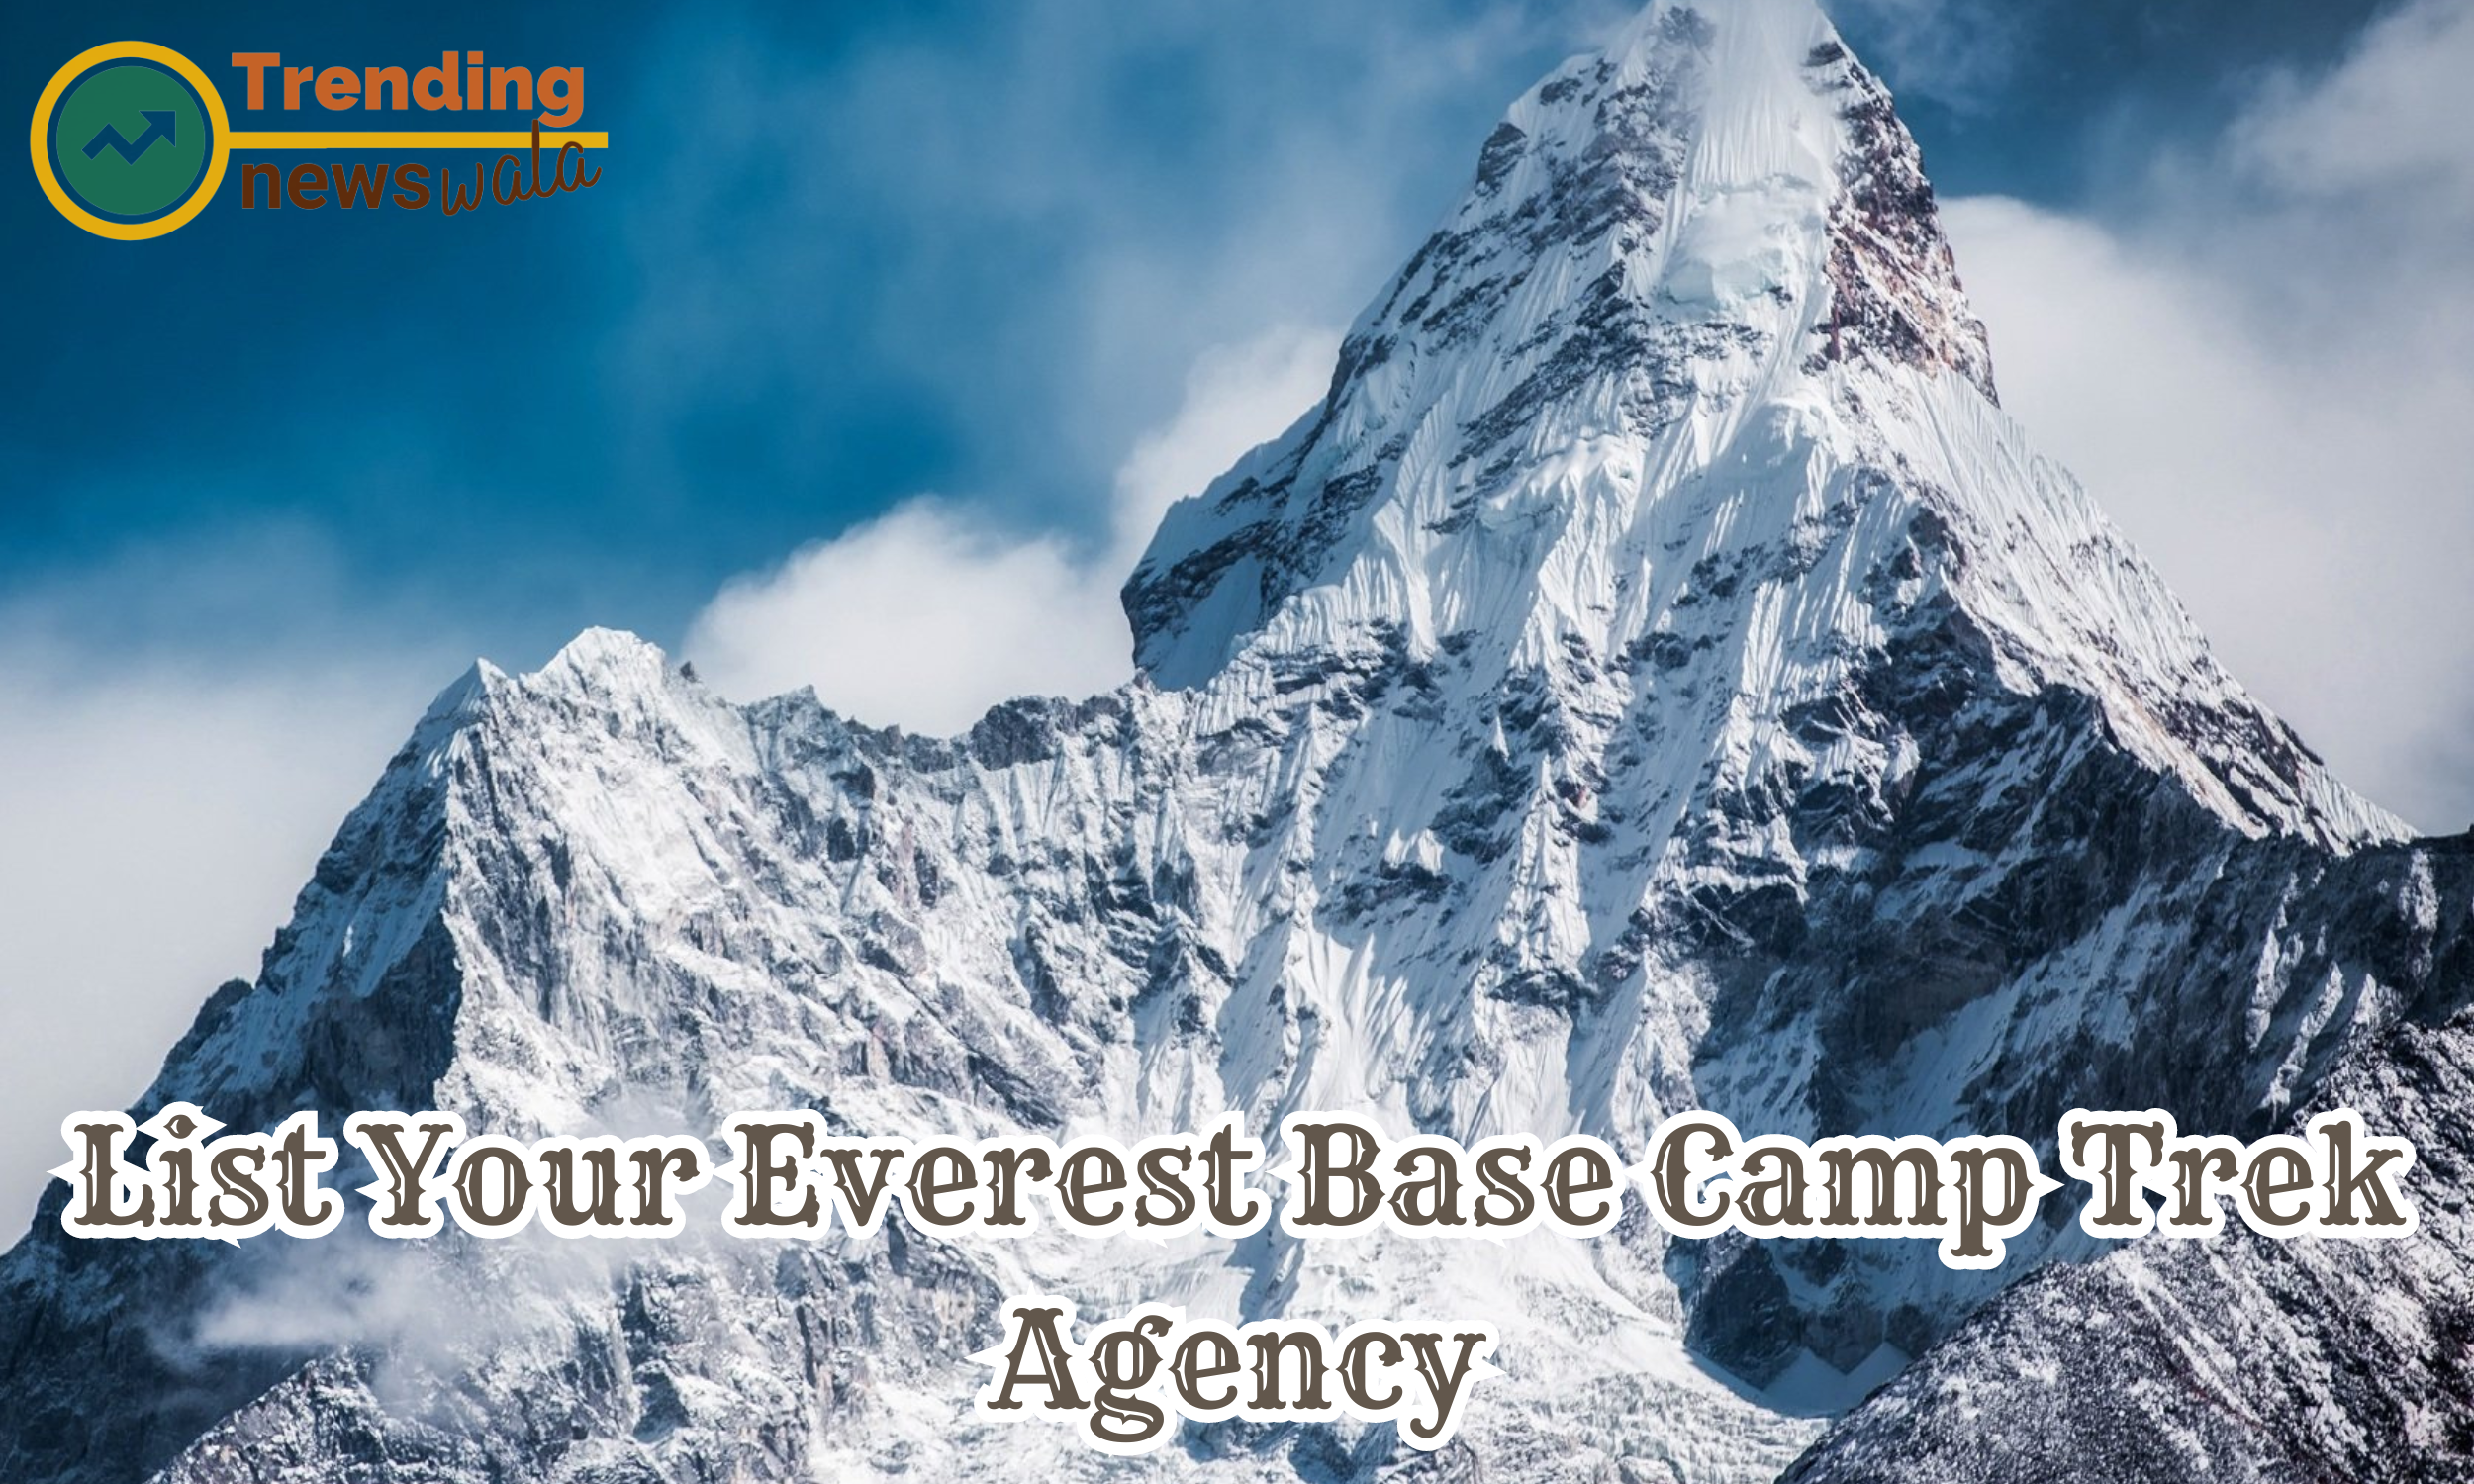  List Your Top 10 Everest Base Camp Trek Agency